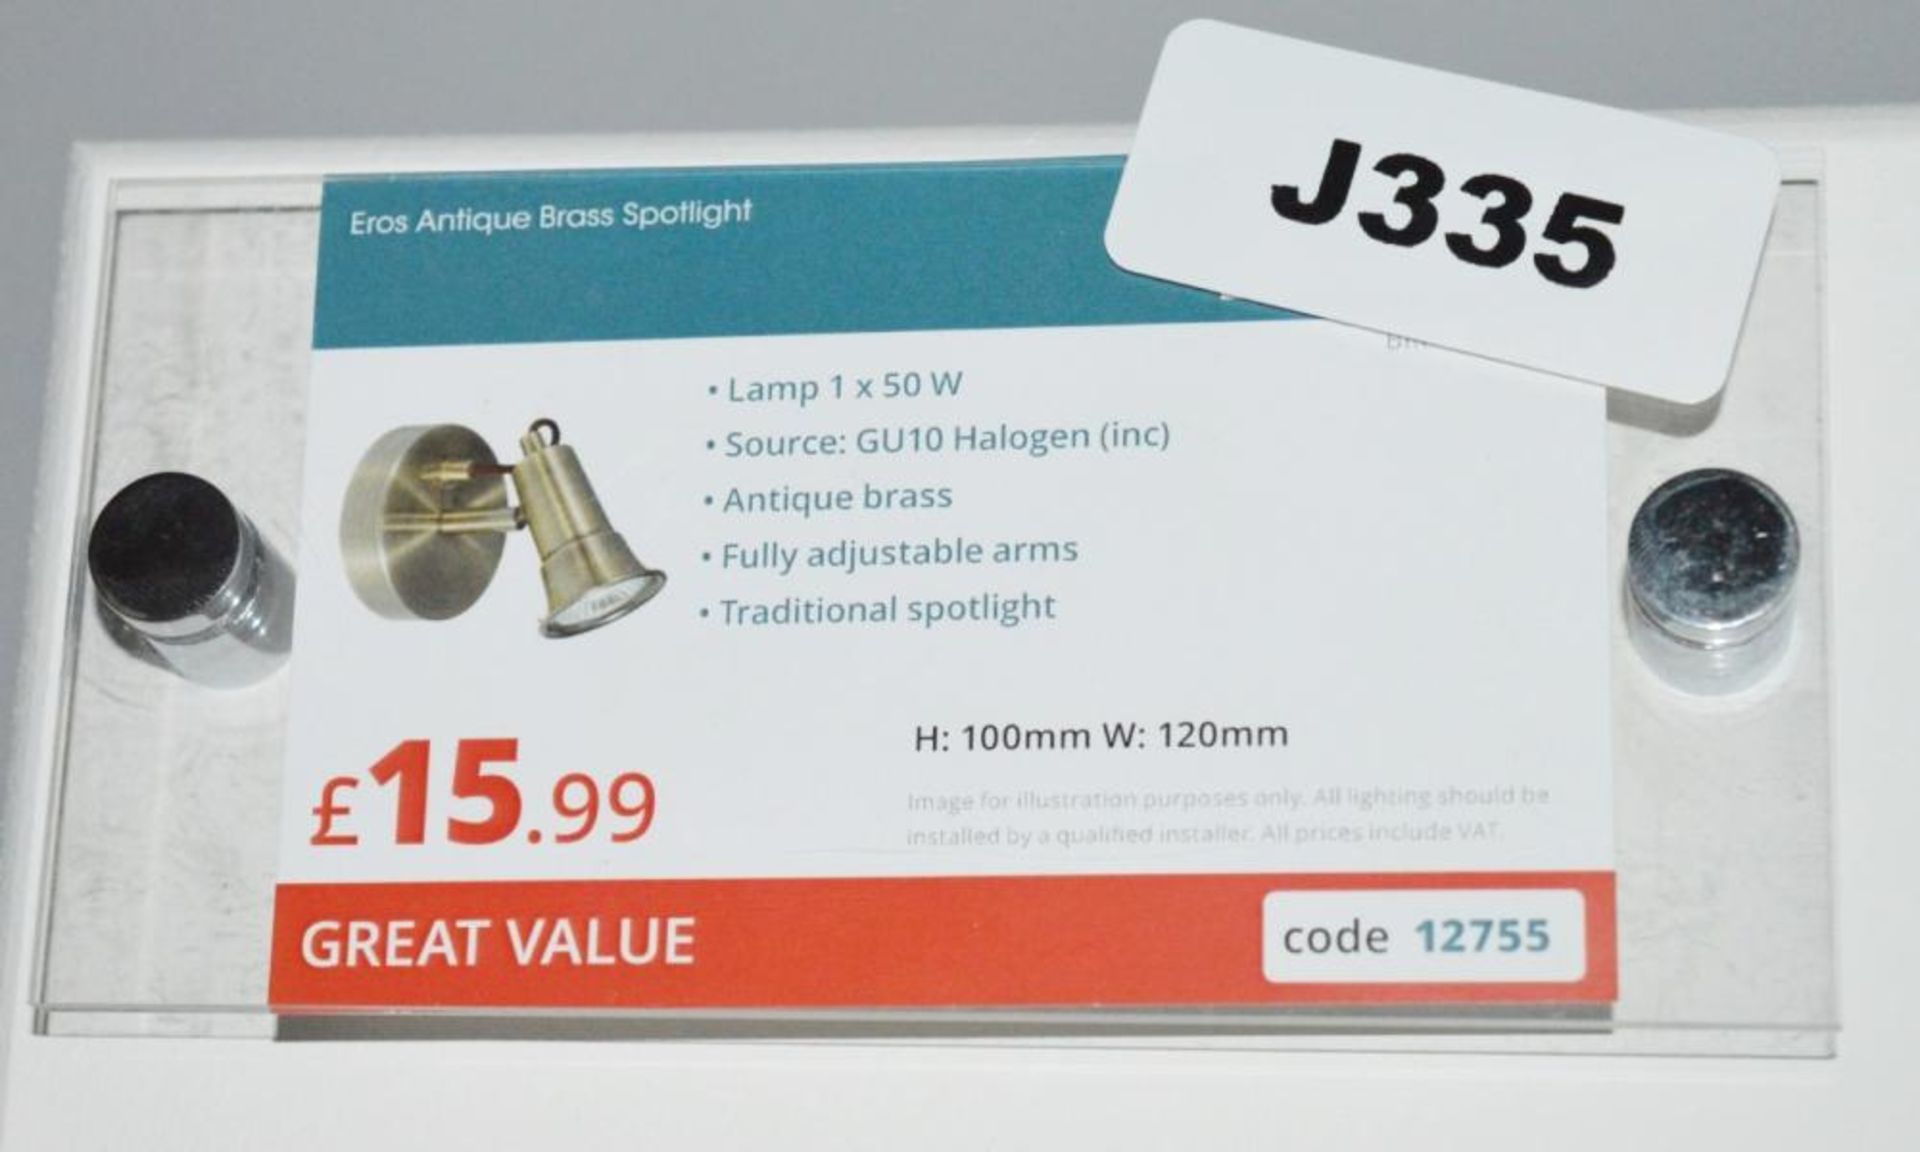 2 x Antique Brass Spotlight - Ex Display Stock - Ref - J335, J336 - CL298 - Location: Altrincham WA1 - Image 3 of 4